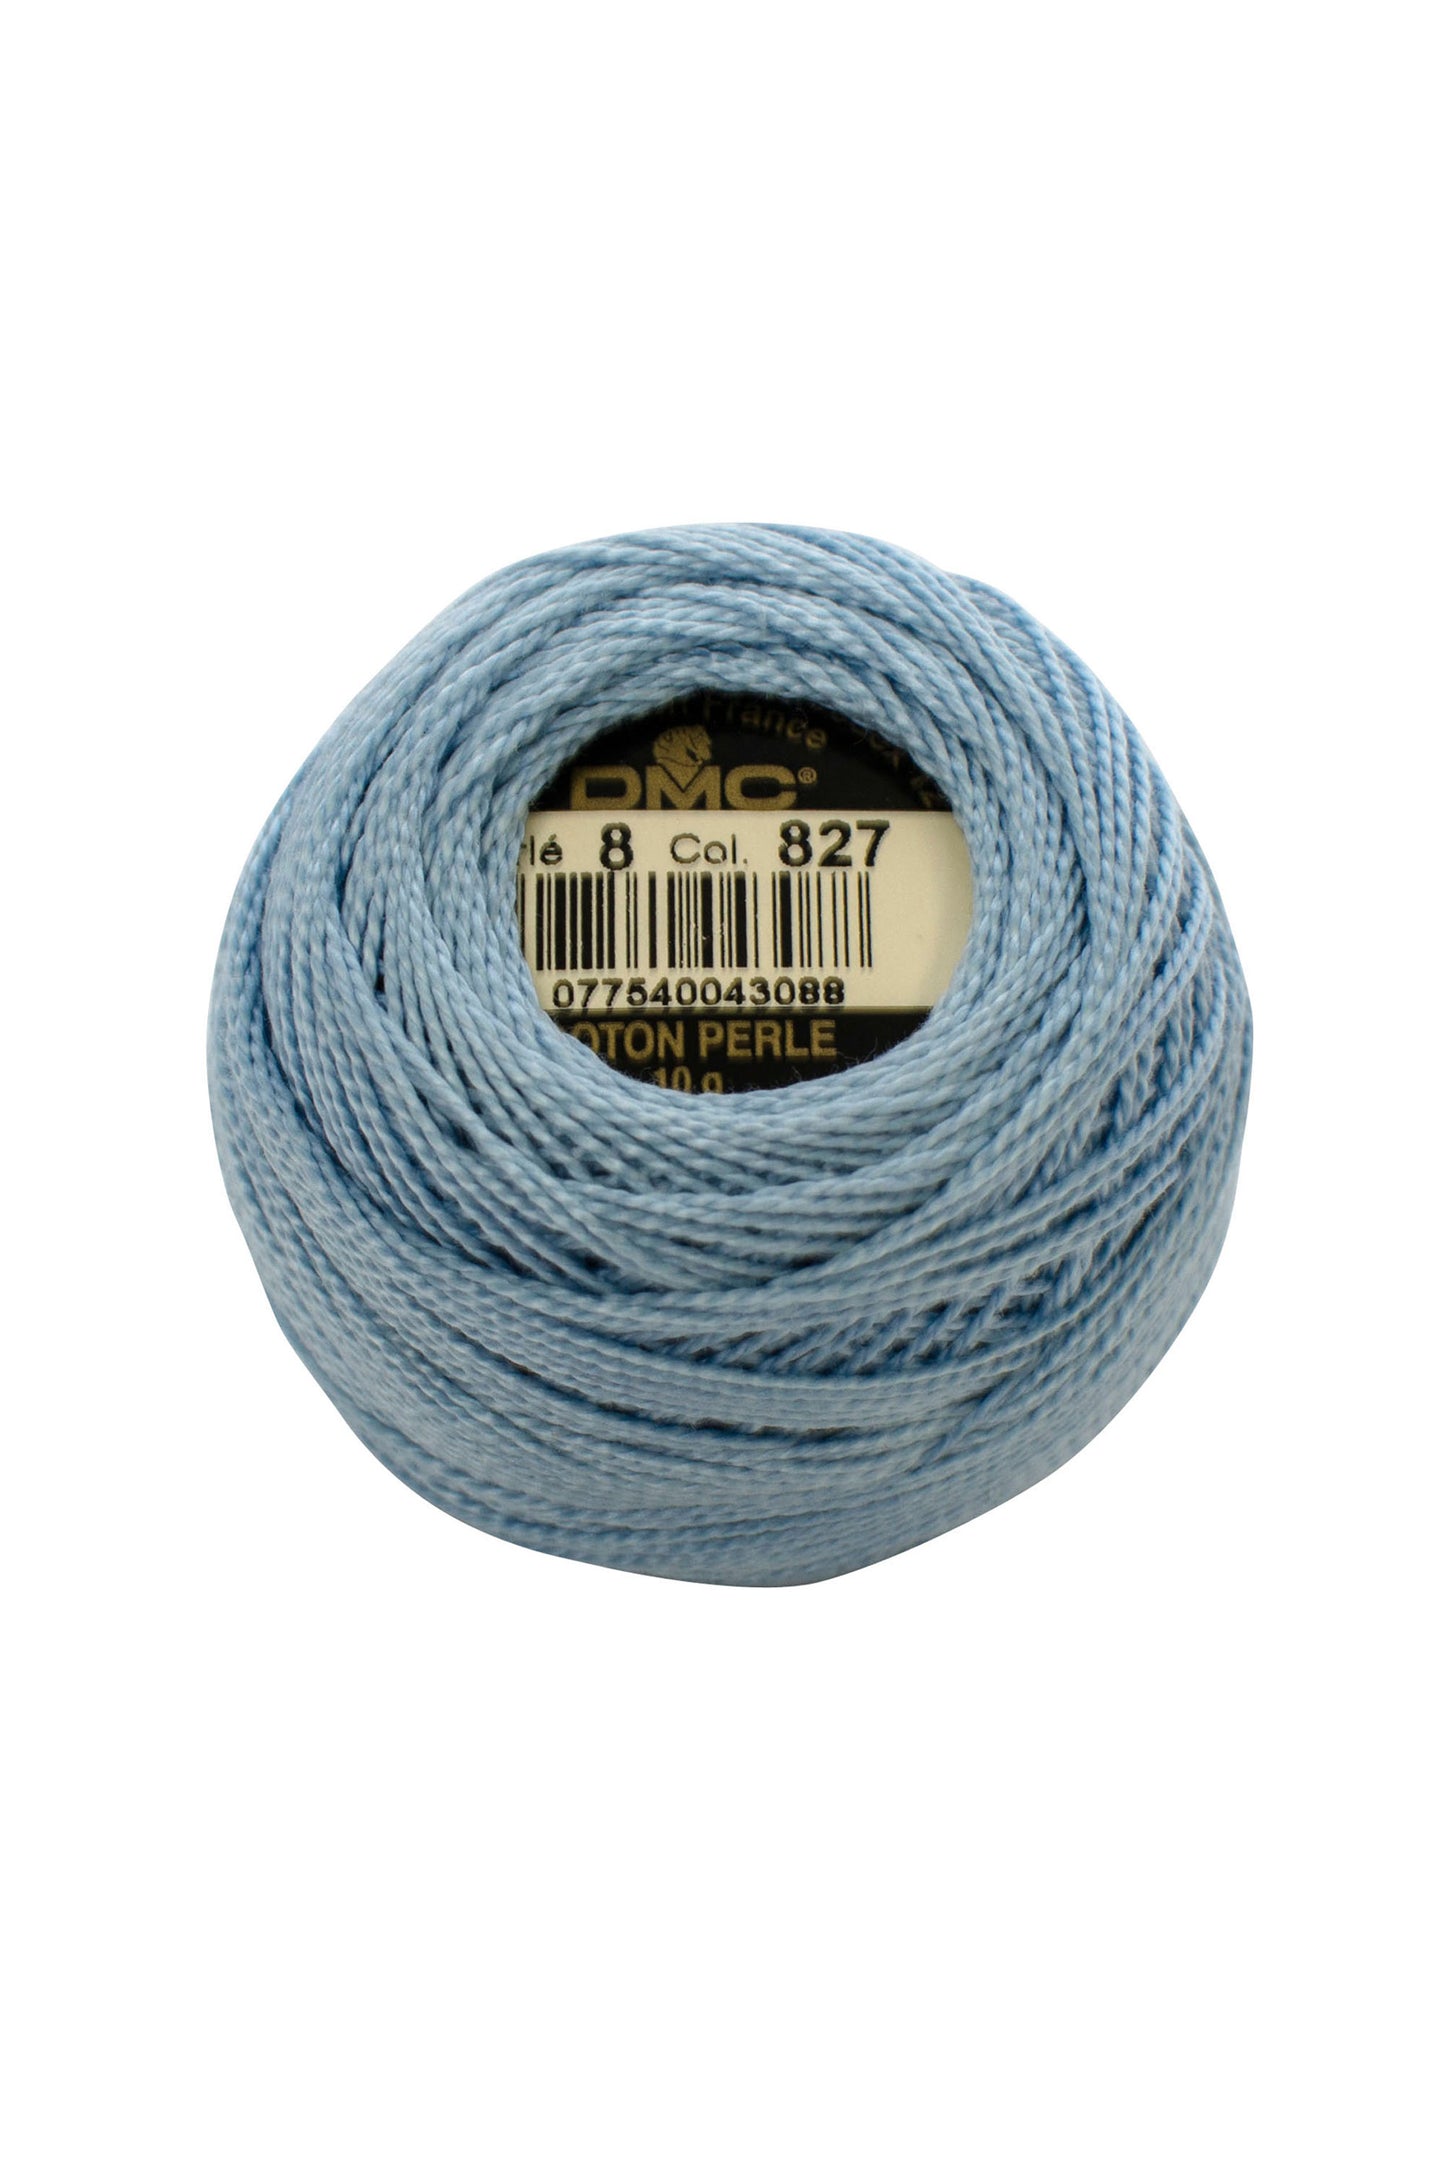 827 Very Light Blue - DMC #8 Perle Cotton Ball